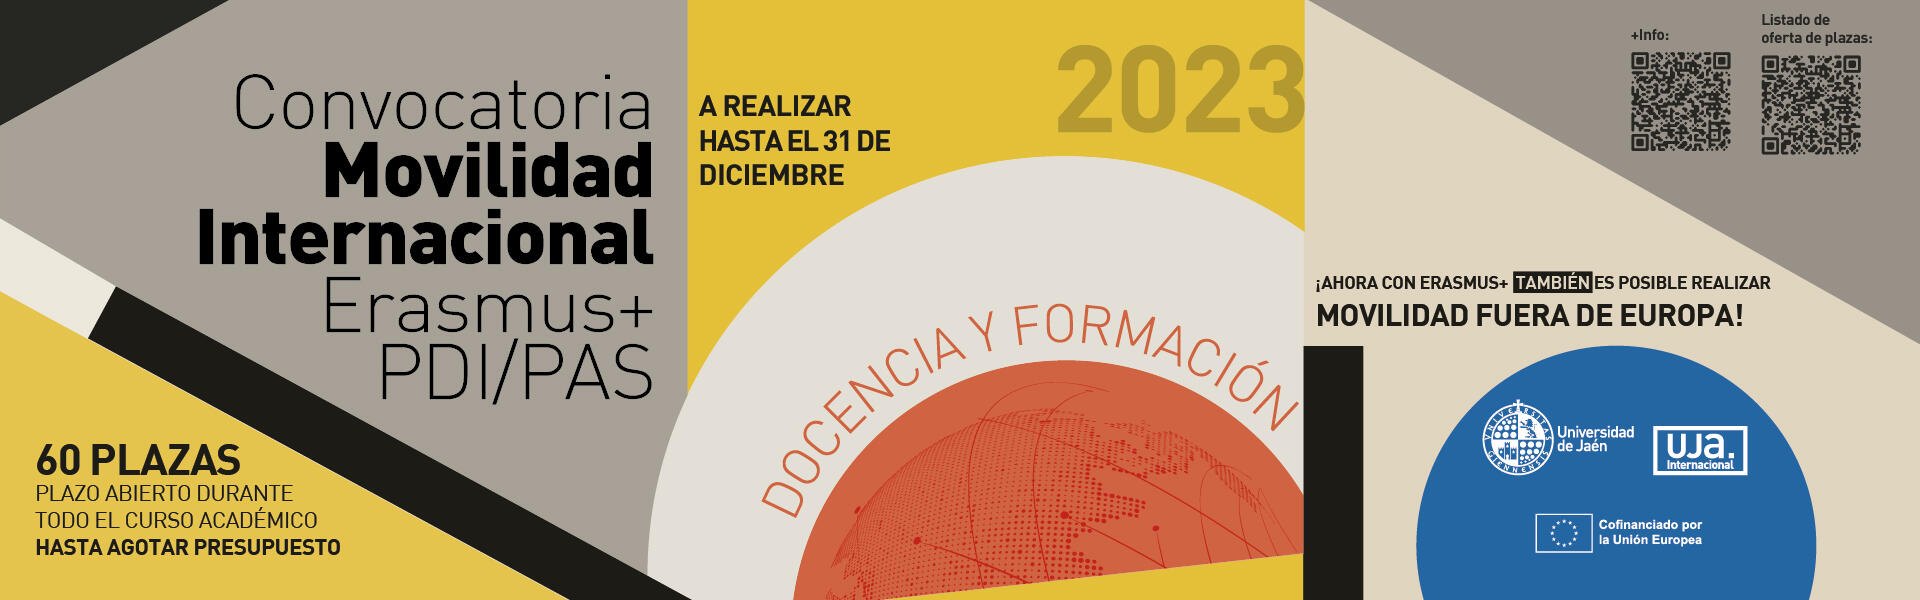 Convocatoria movilidad Erasmus+ PDI PAS 2022-2023